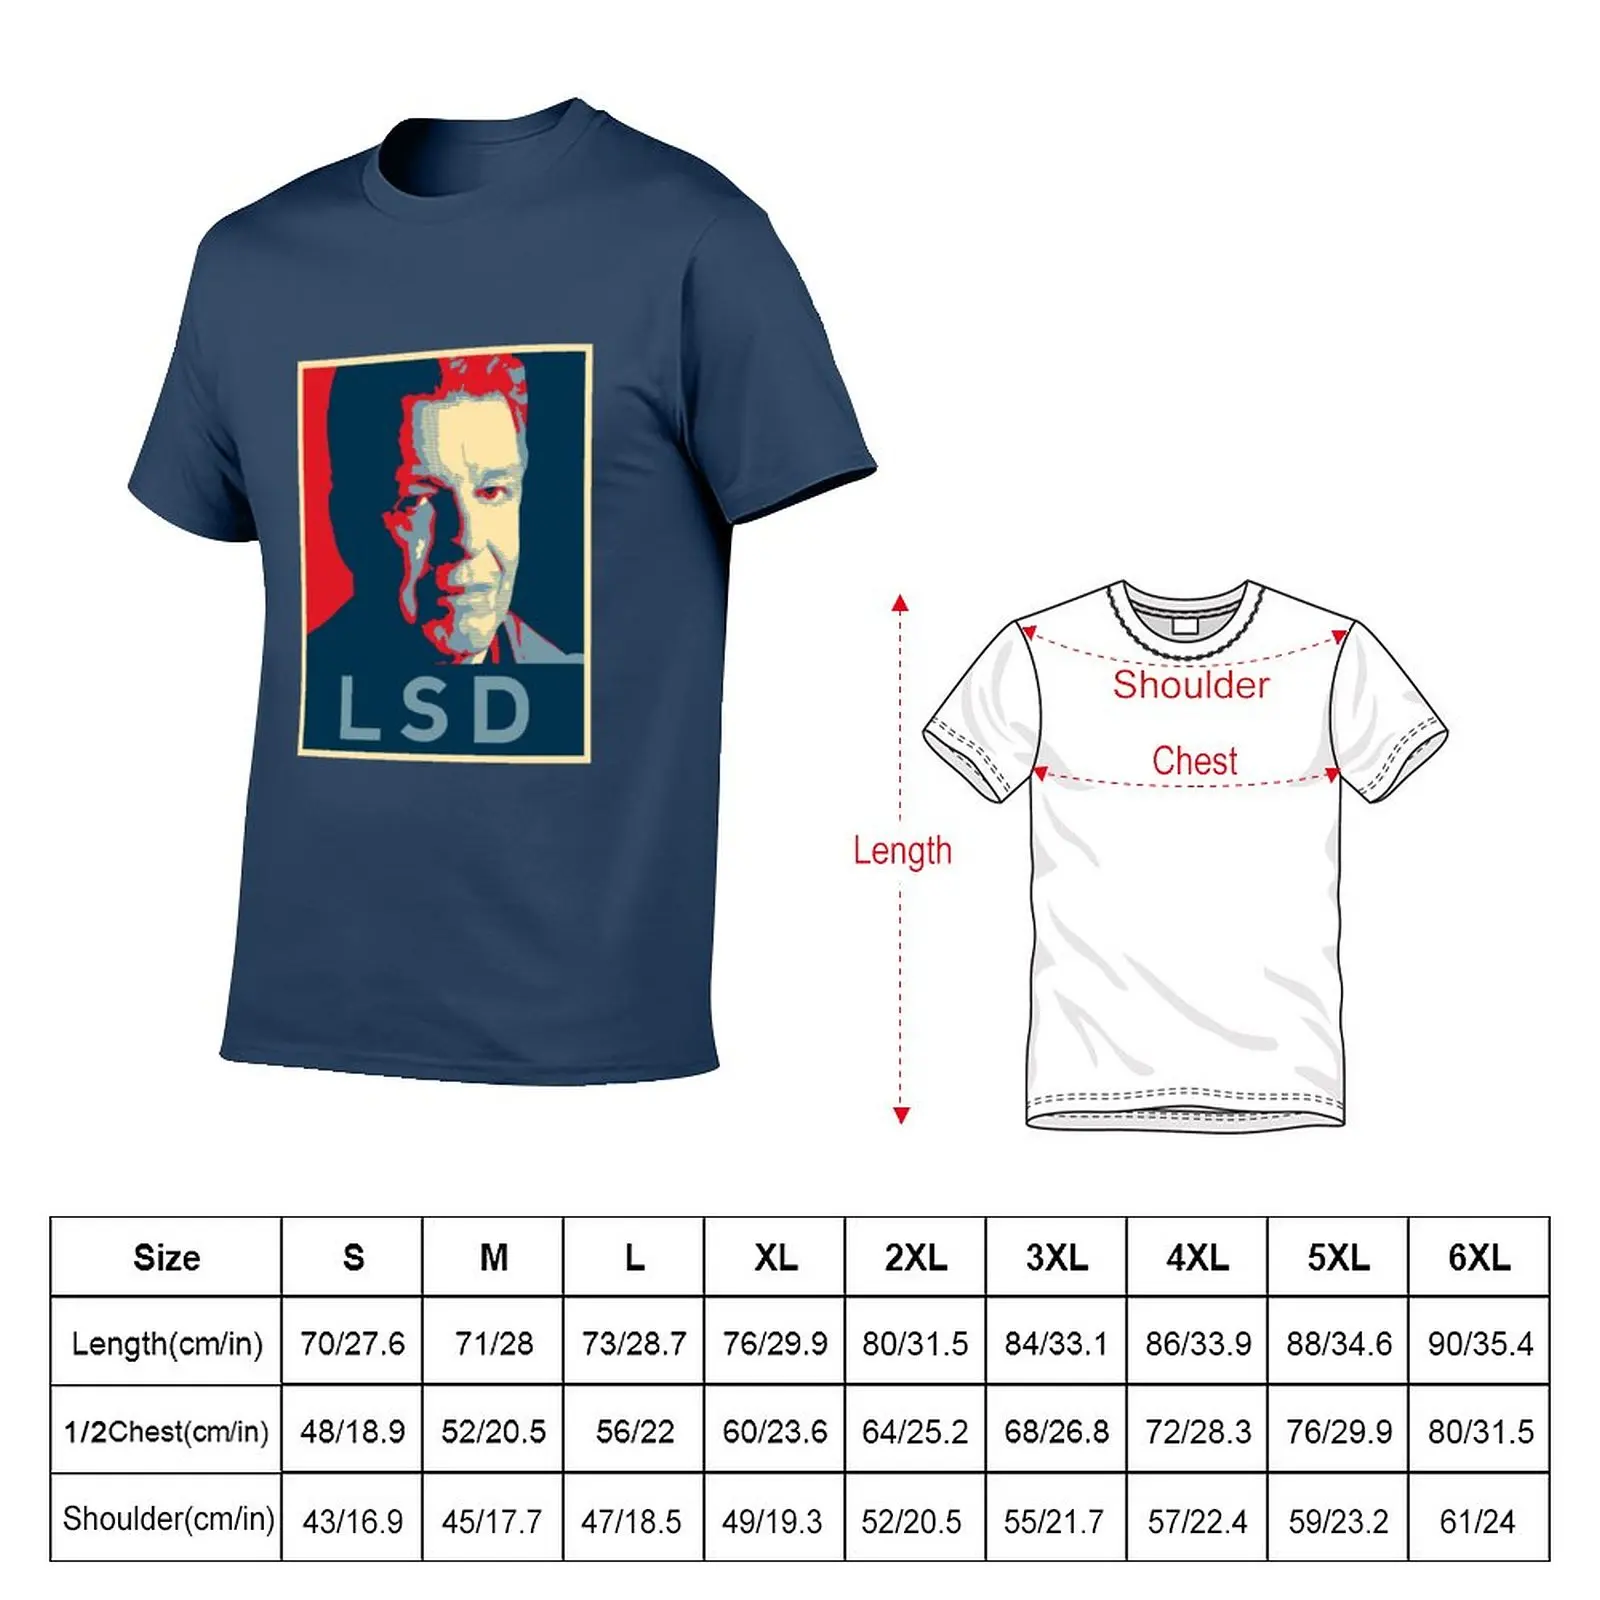 LSD-Camiseta de pôster grande do LSD masculino, tops bonitos, roupas